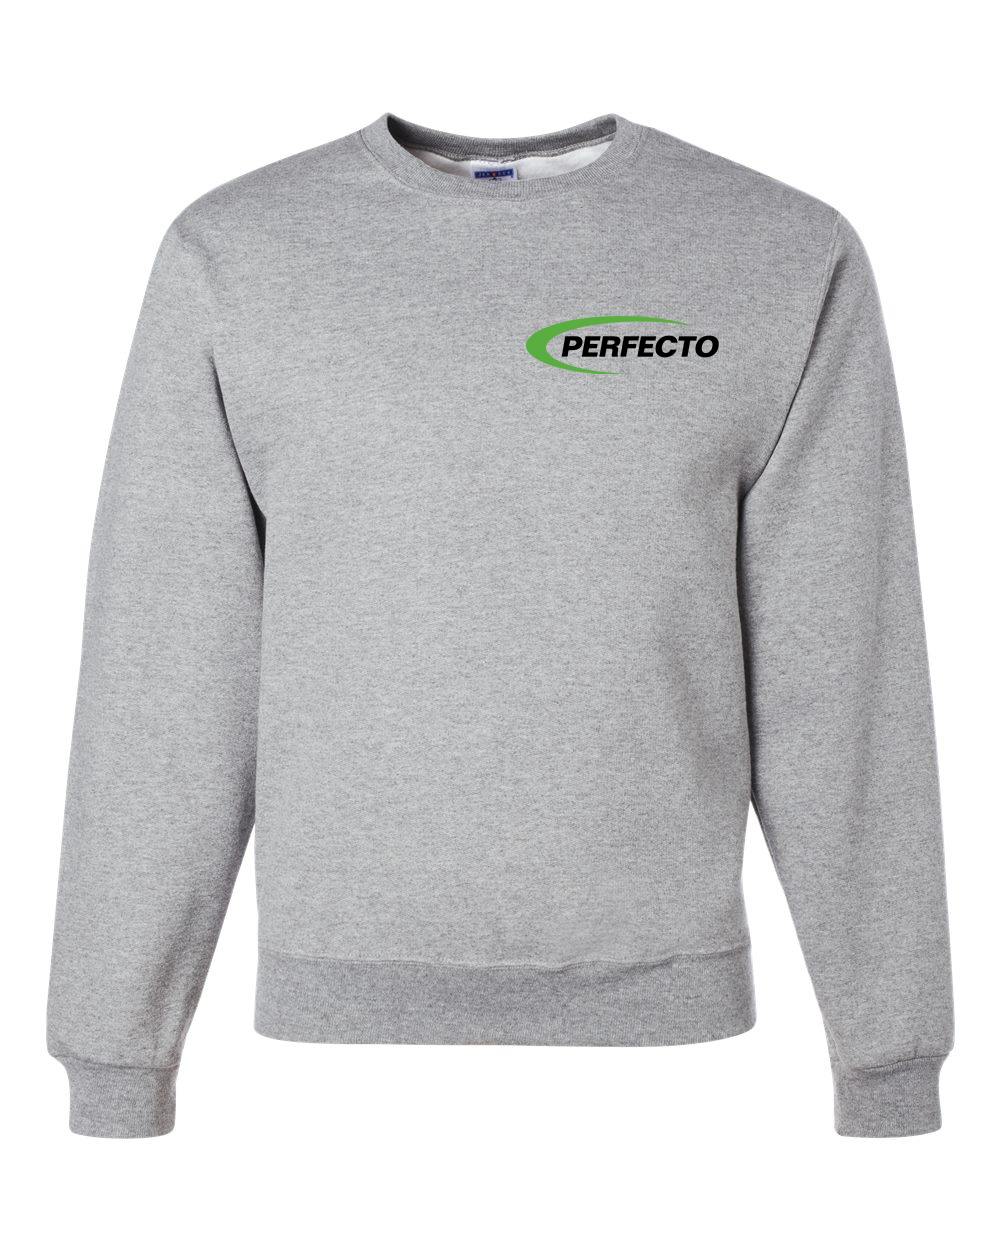 Perfecto Small Logo Crew Sweatshirt - Athletic Heather